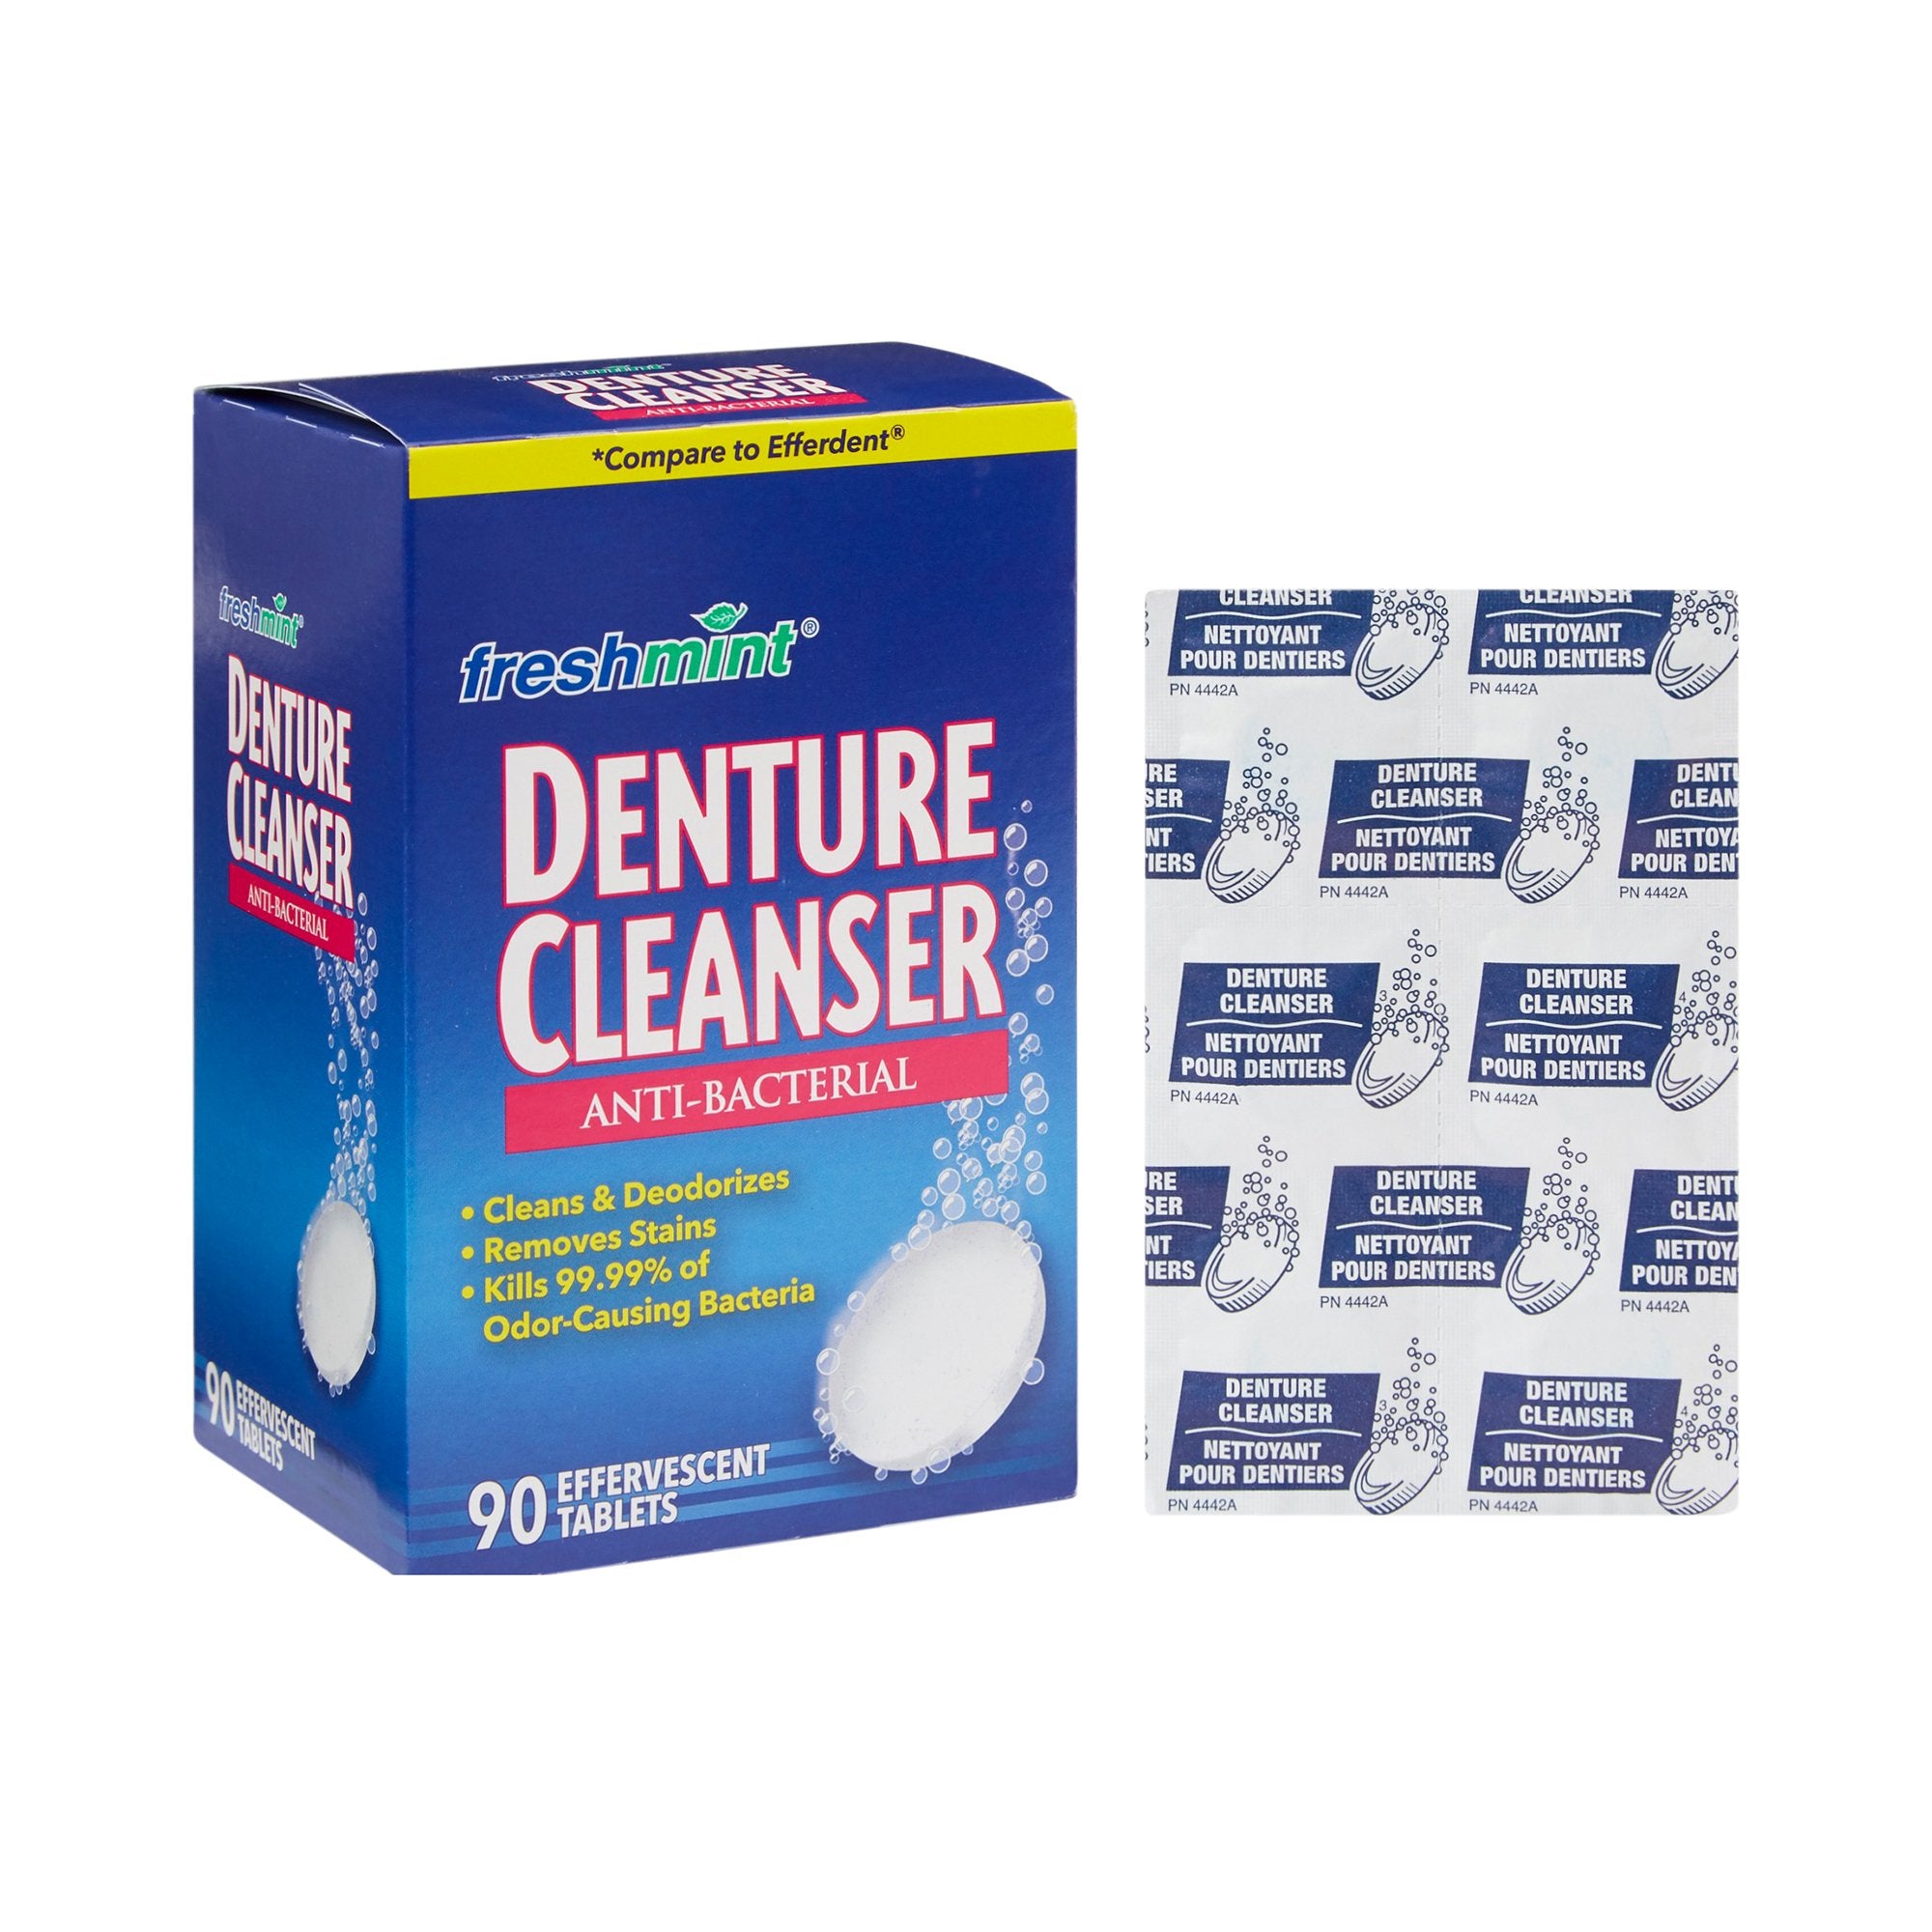 Denture Cleaner Freshmint® Mint Flavor